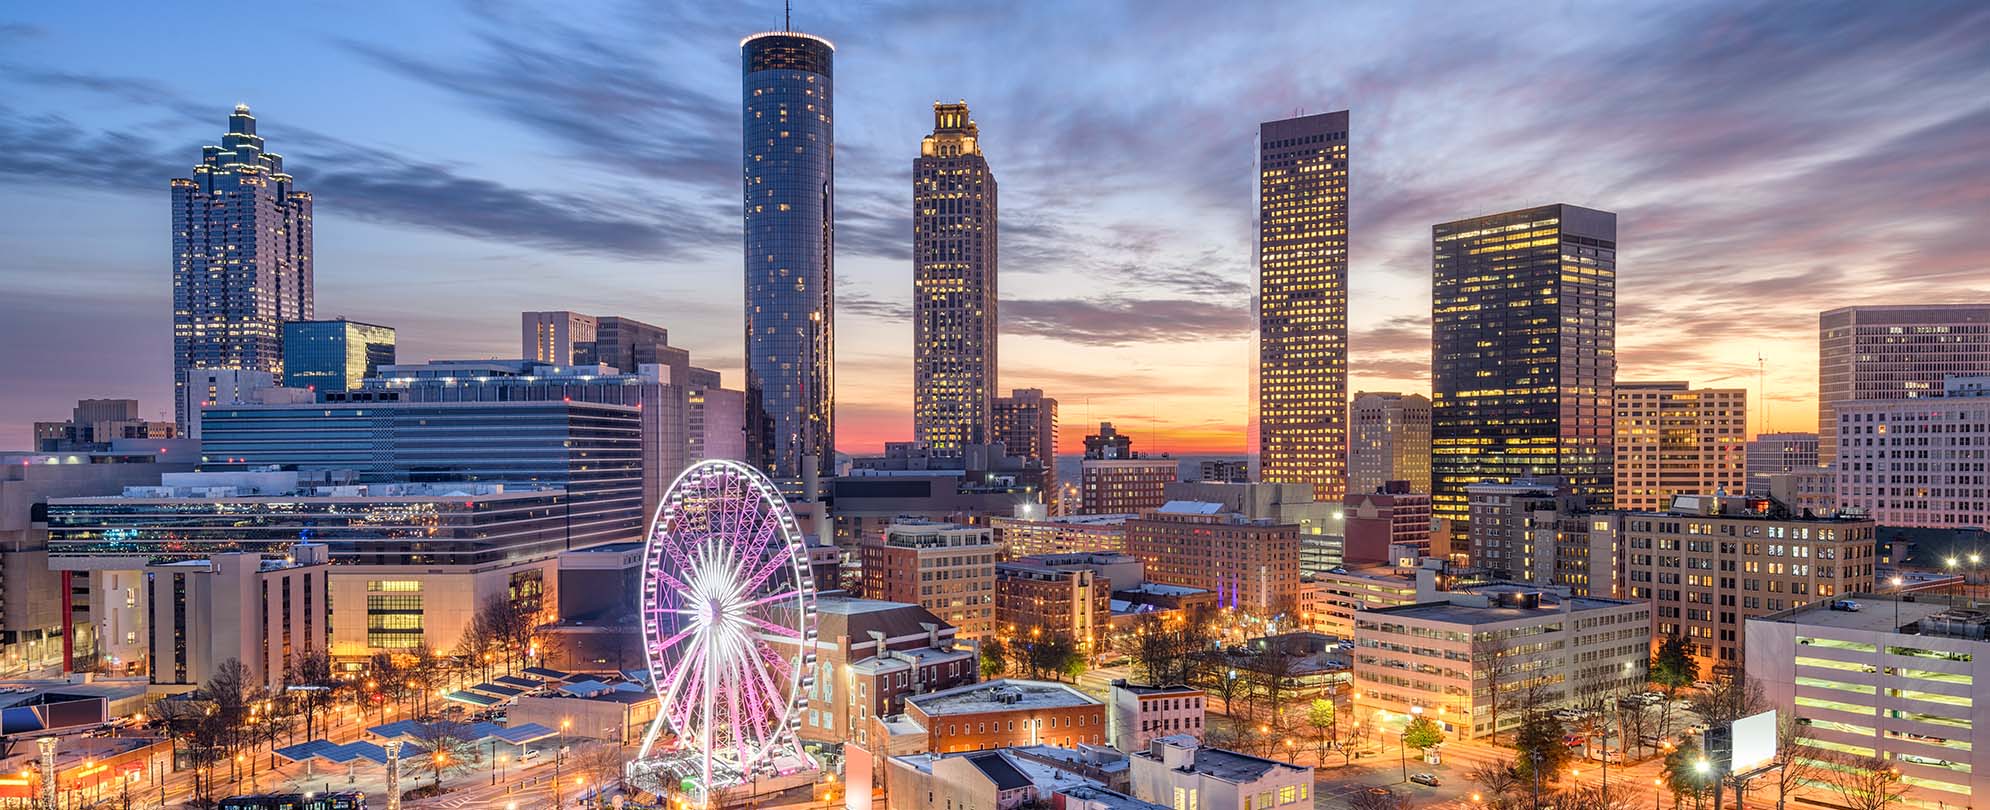 The city of Atlanta, Georgia, lit up at night.